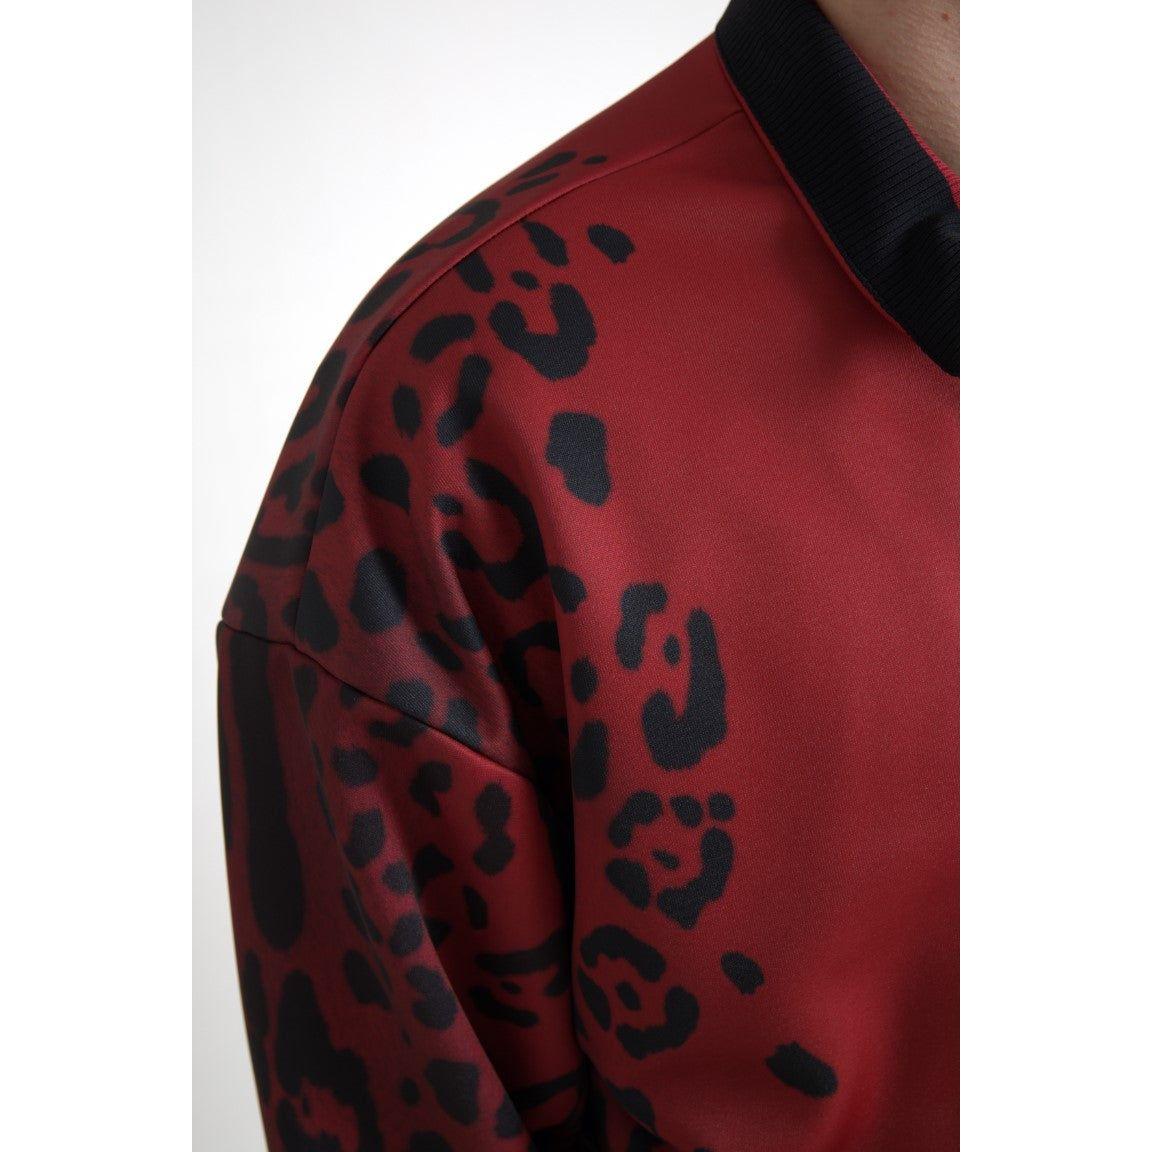 Dolce & Gabbana Red Leopard Print Bomber Jacket red-leopard-polyester-bomber-full-zip-jacket 465A7829-Medium-59e572be-063.jpg